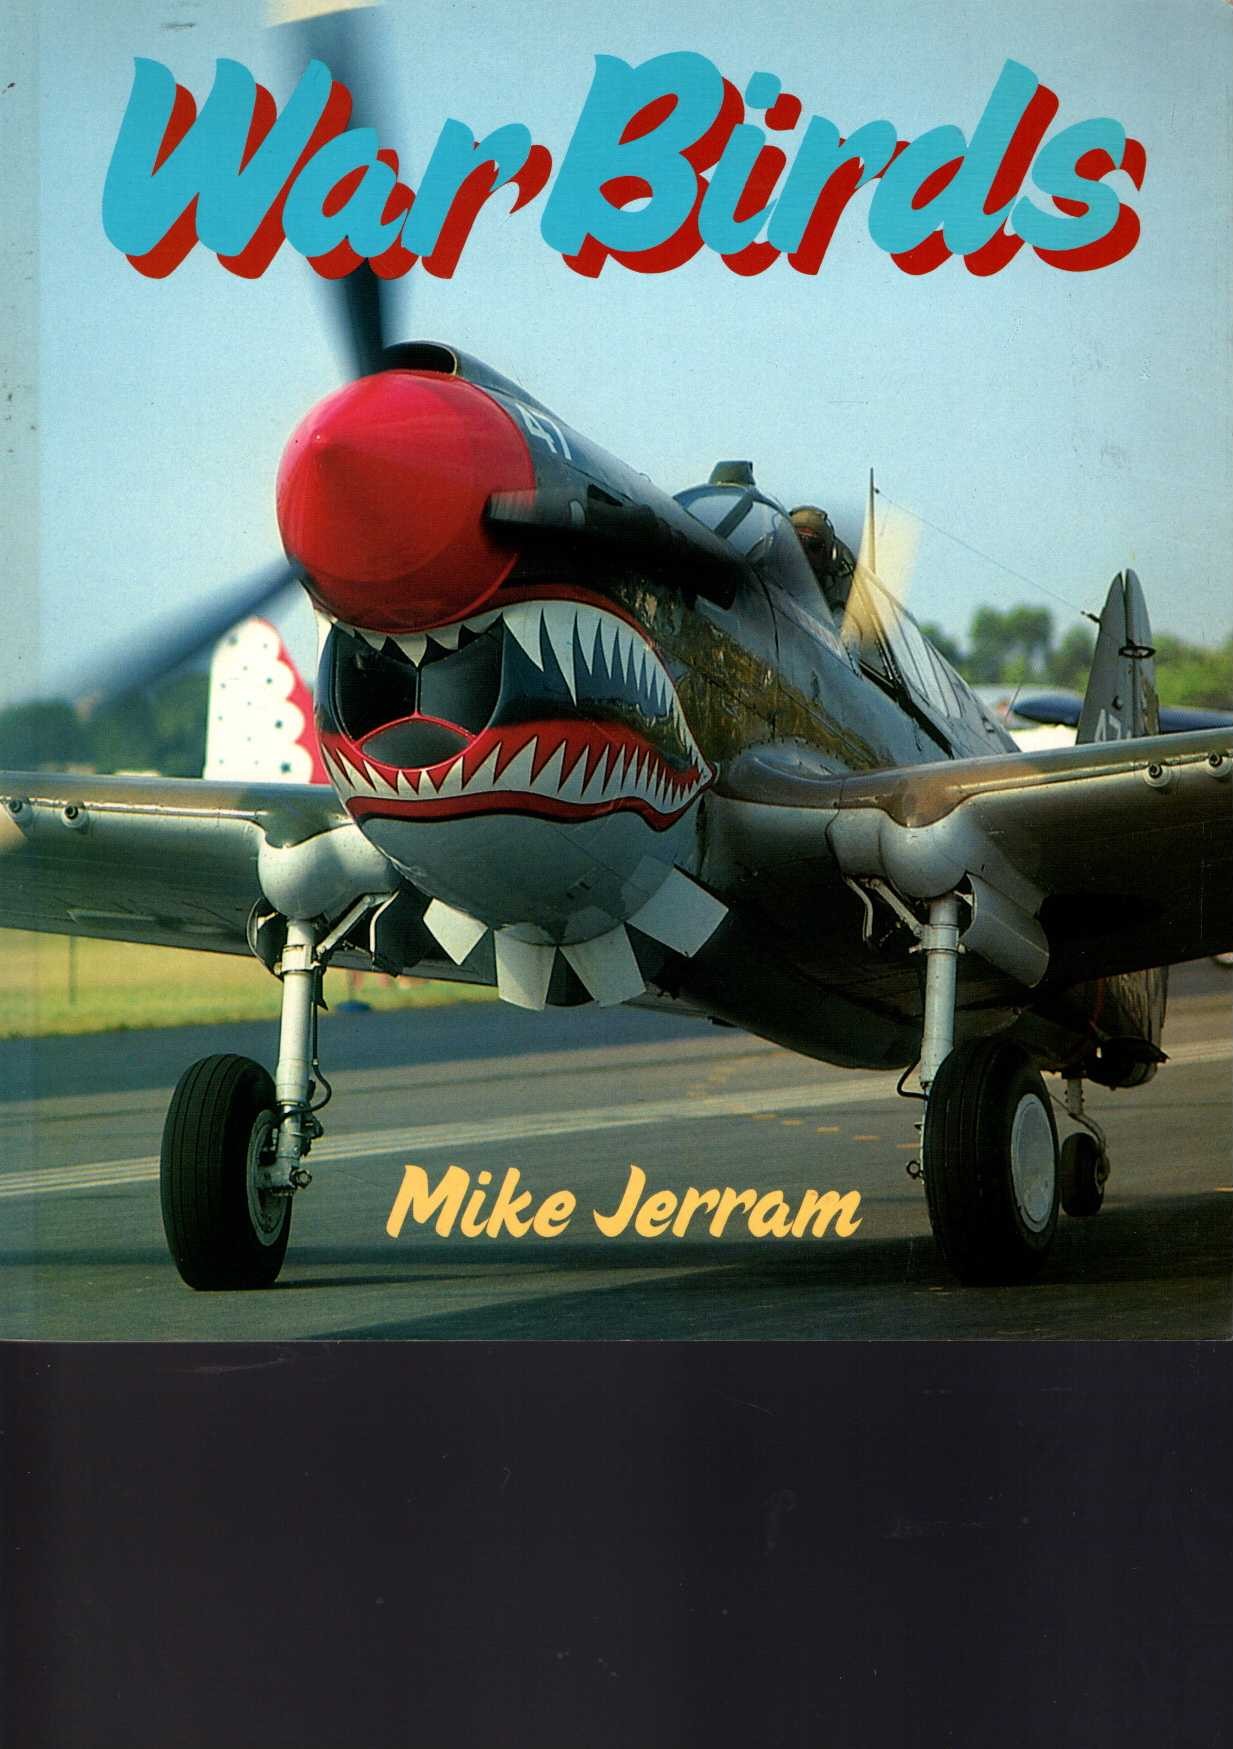 Mike Jerram  WAR BIRDS front book cover image